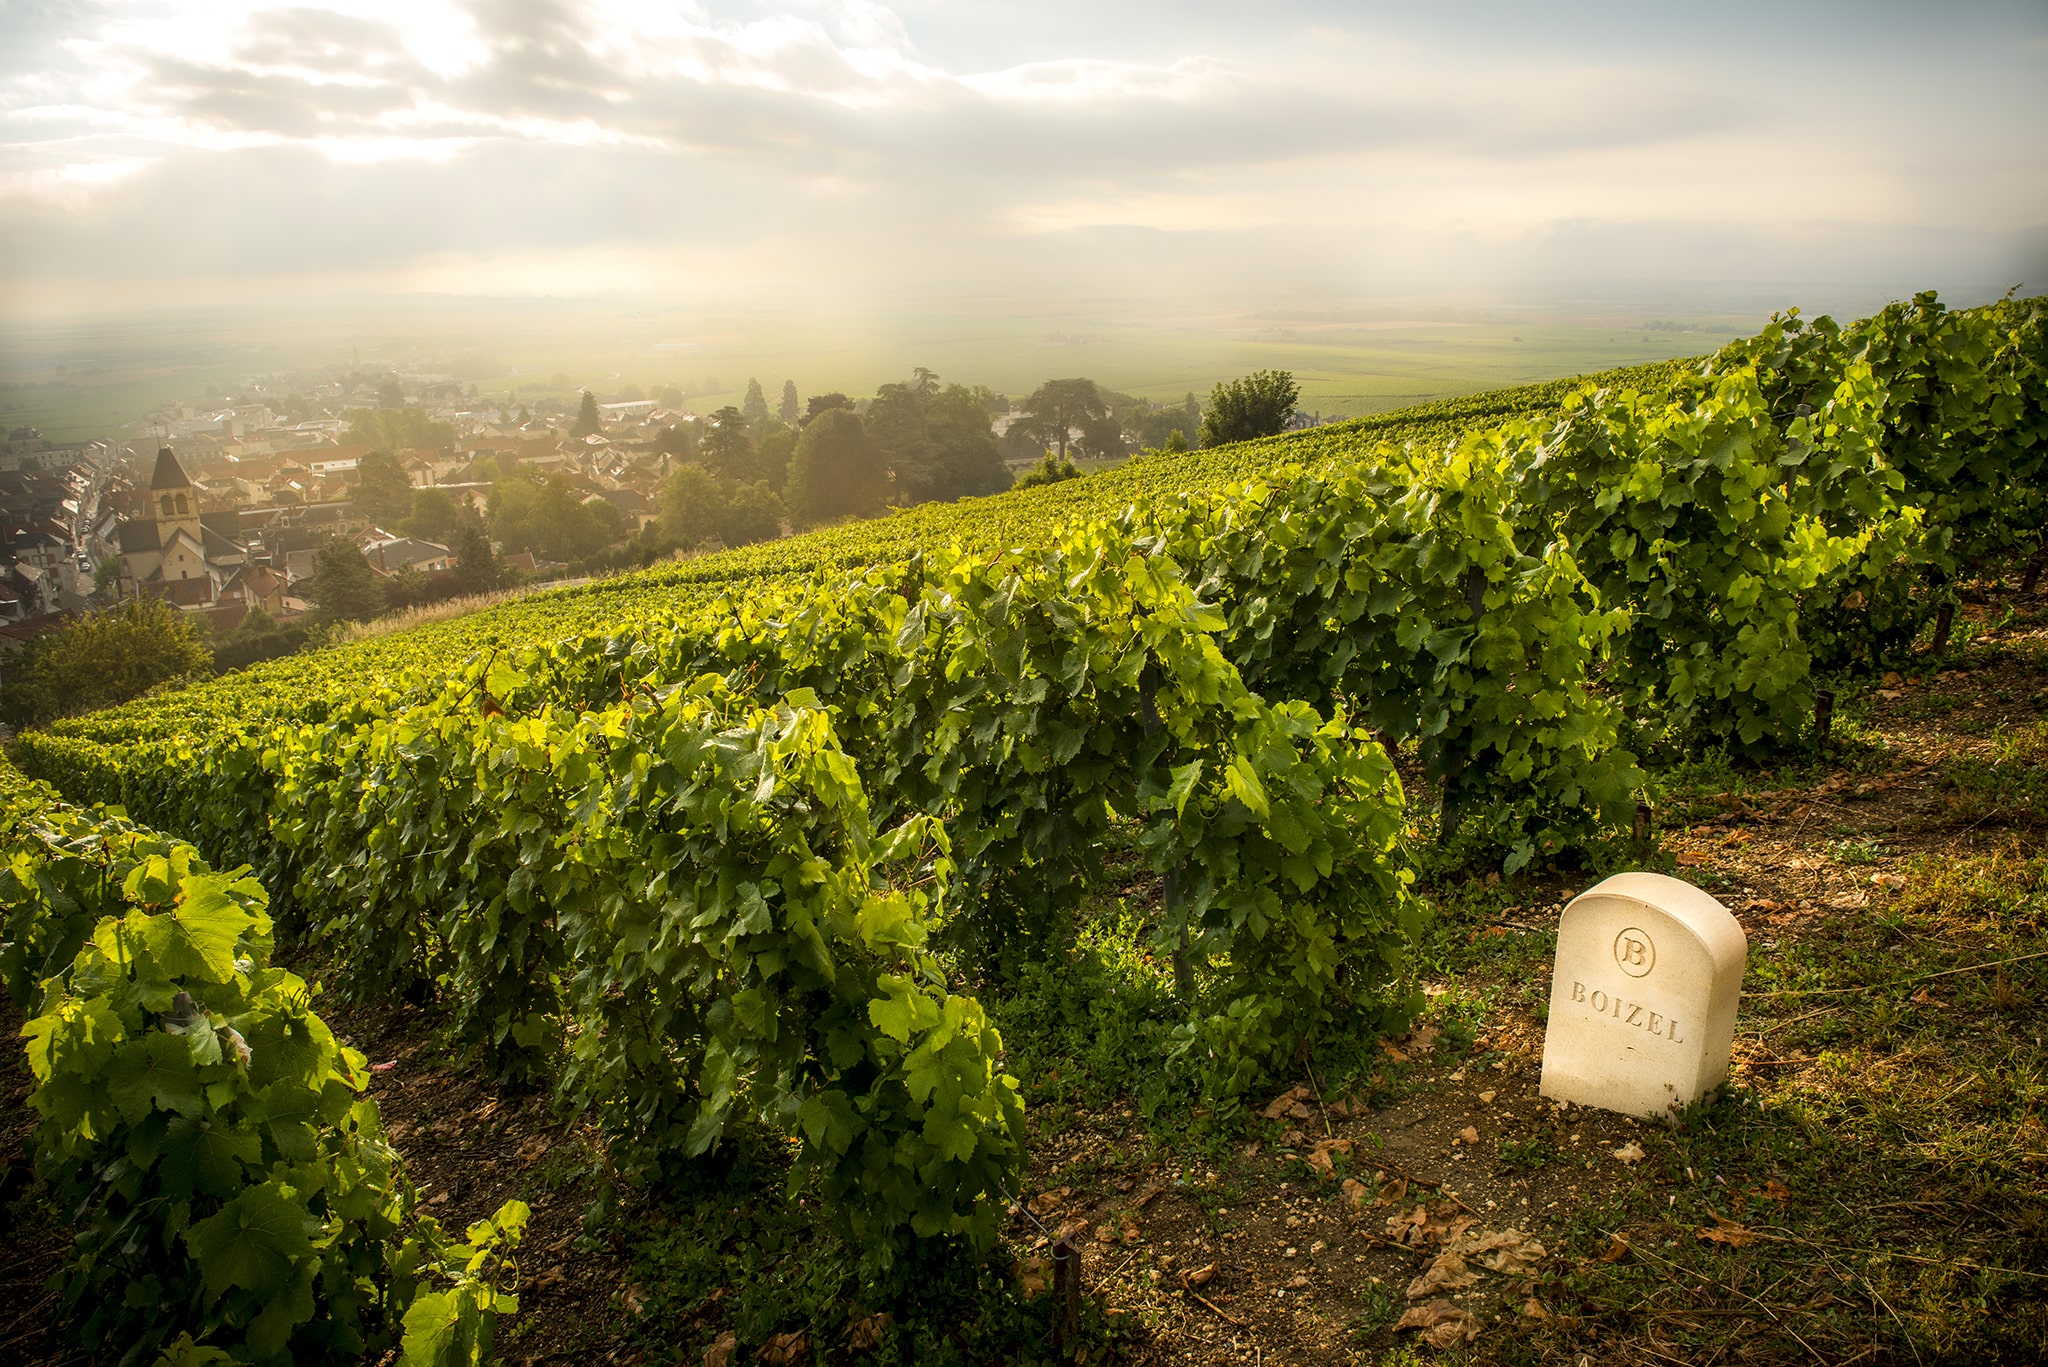 Boizel vineyard